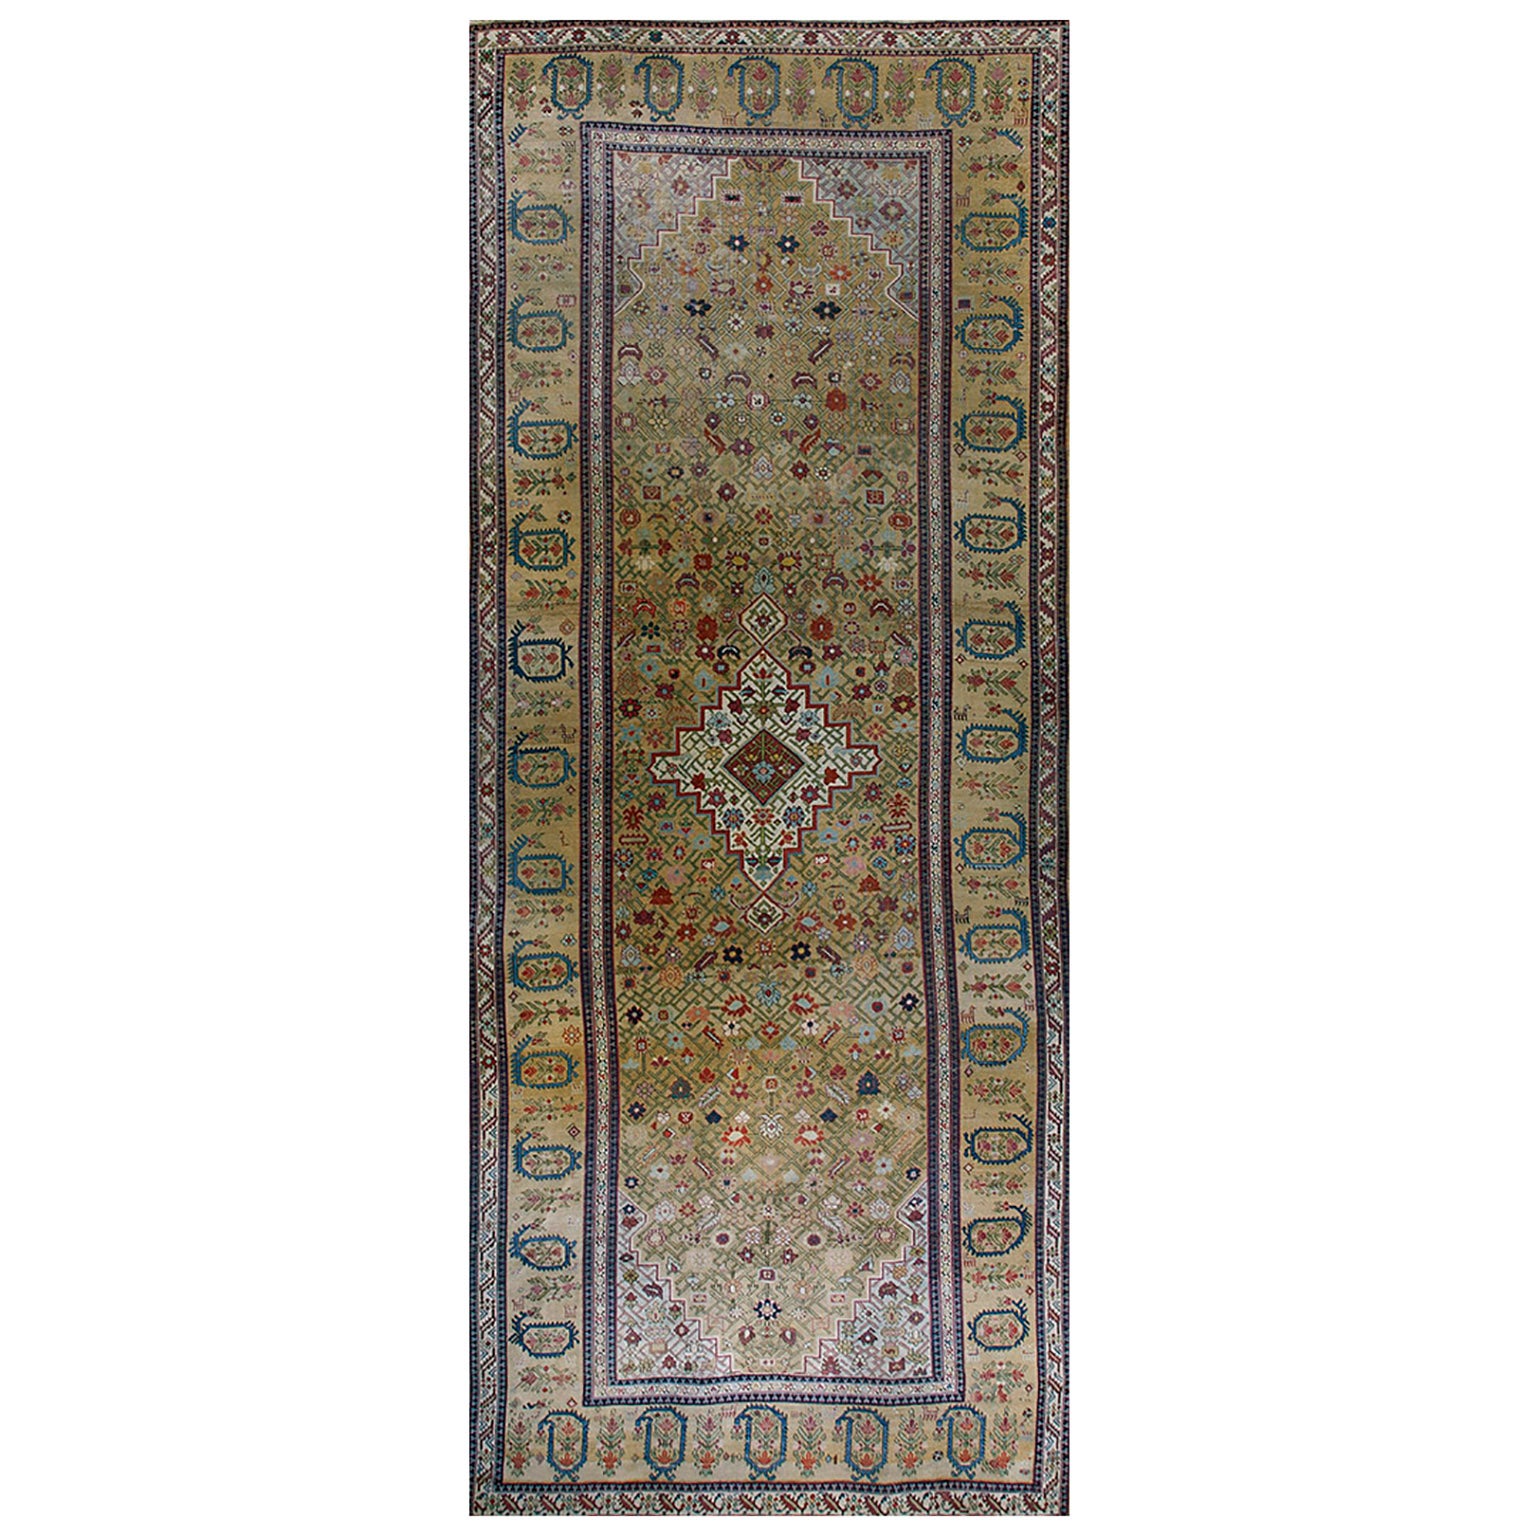 Mid 19th Century Caucasian Shusha Karabagh Carpet ( 7'2" x 18' - 220 x 550 )